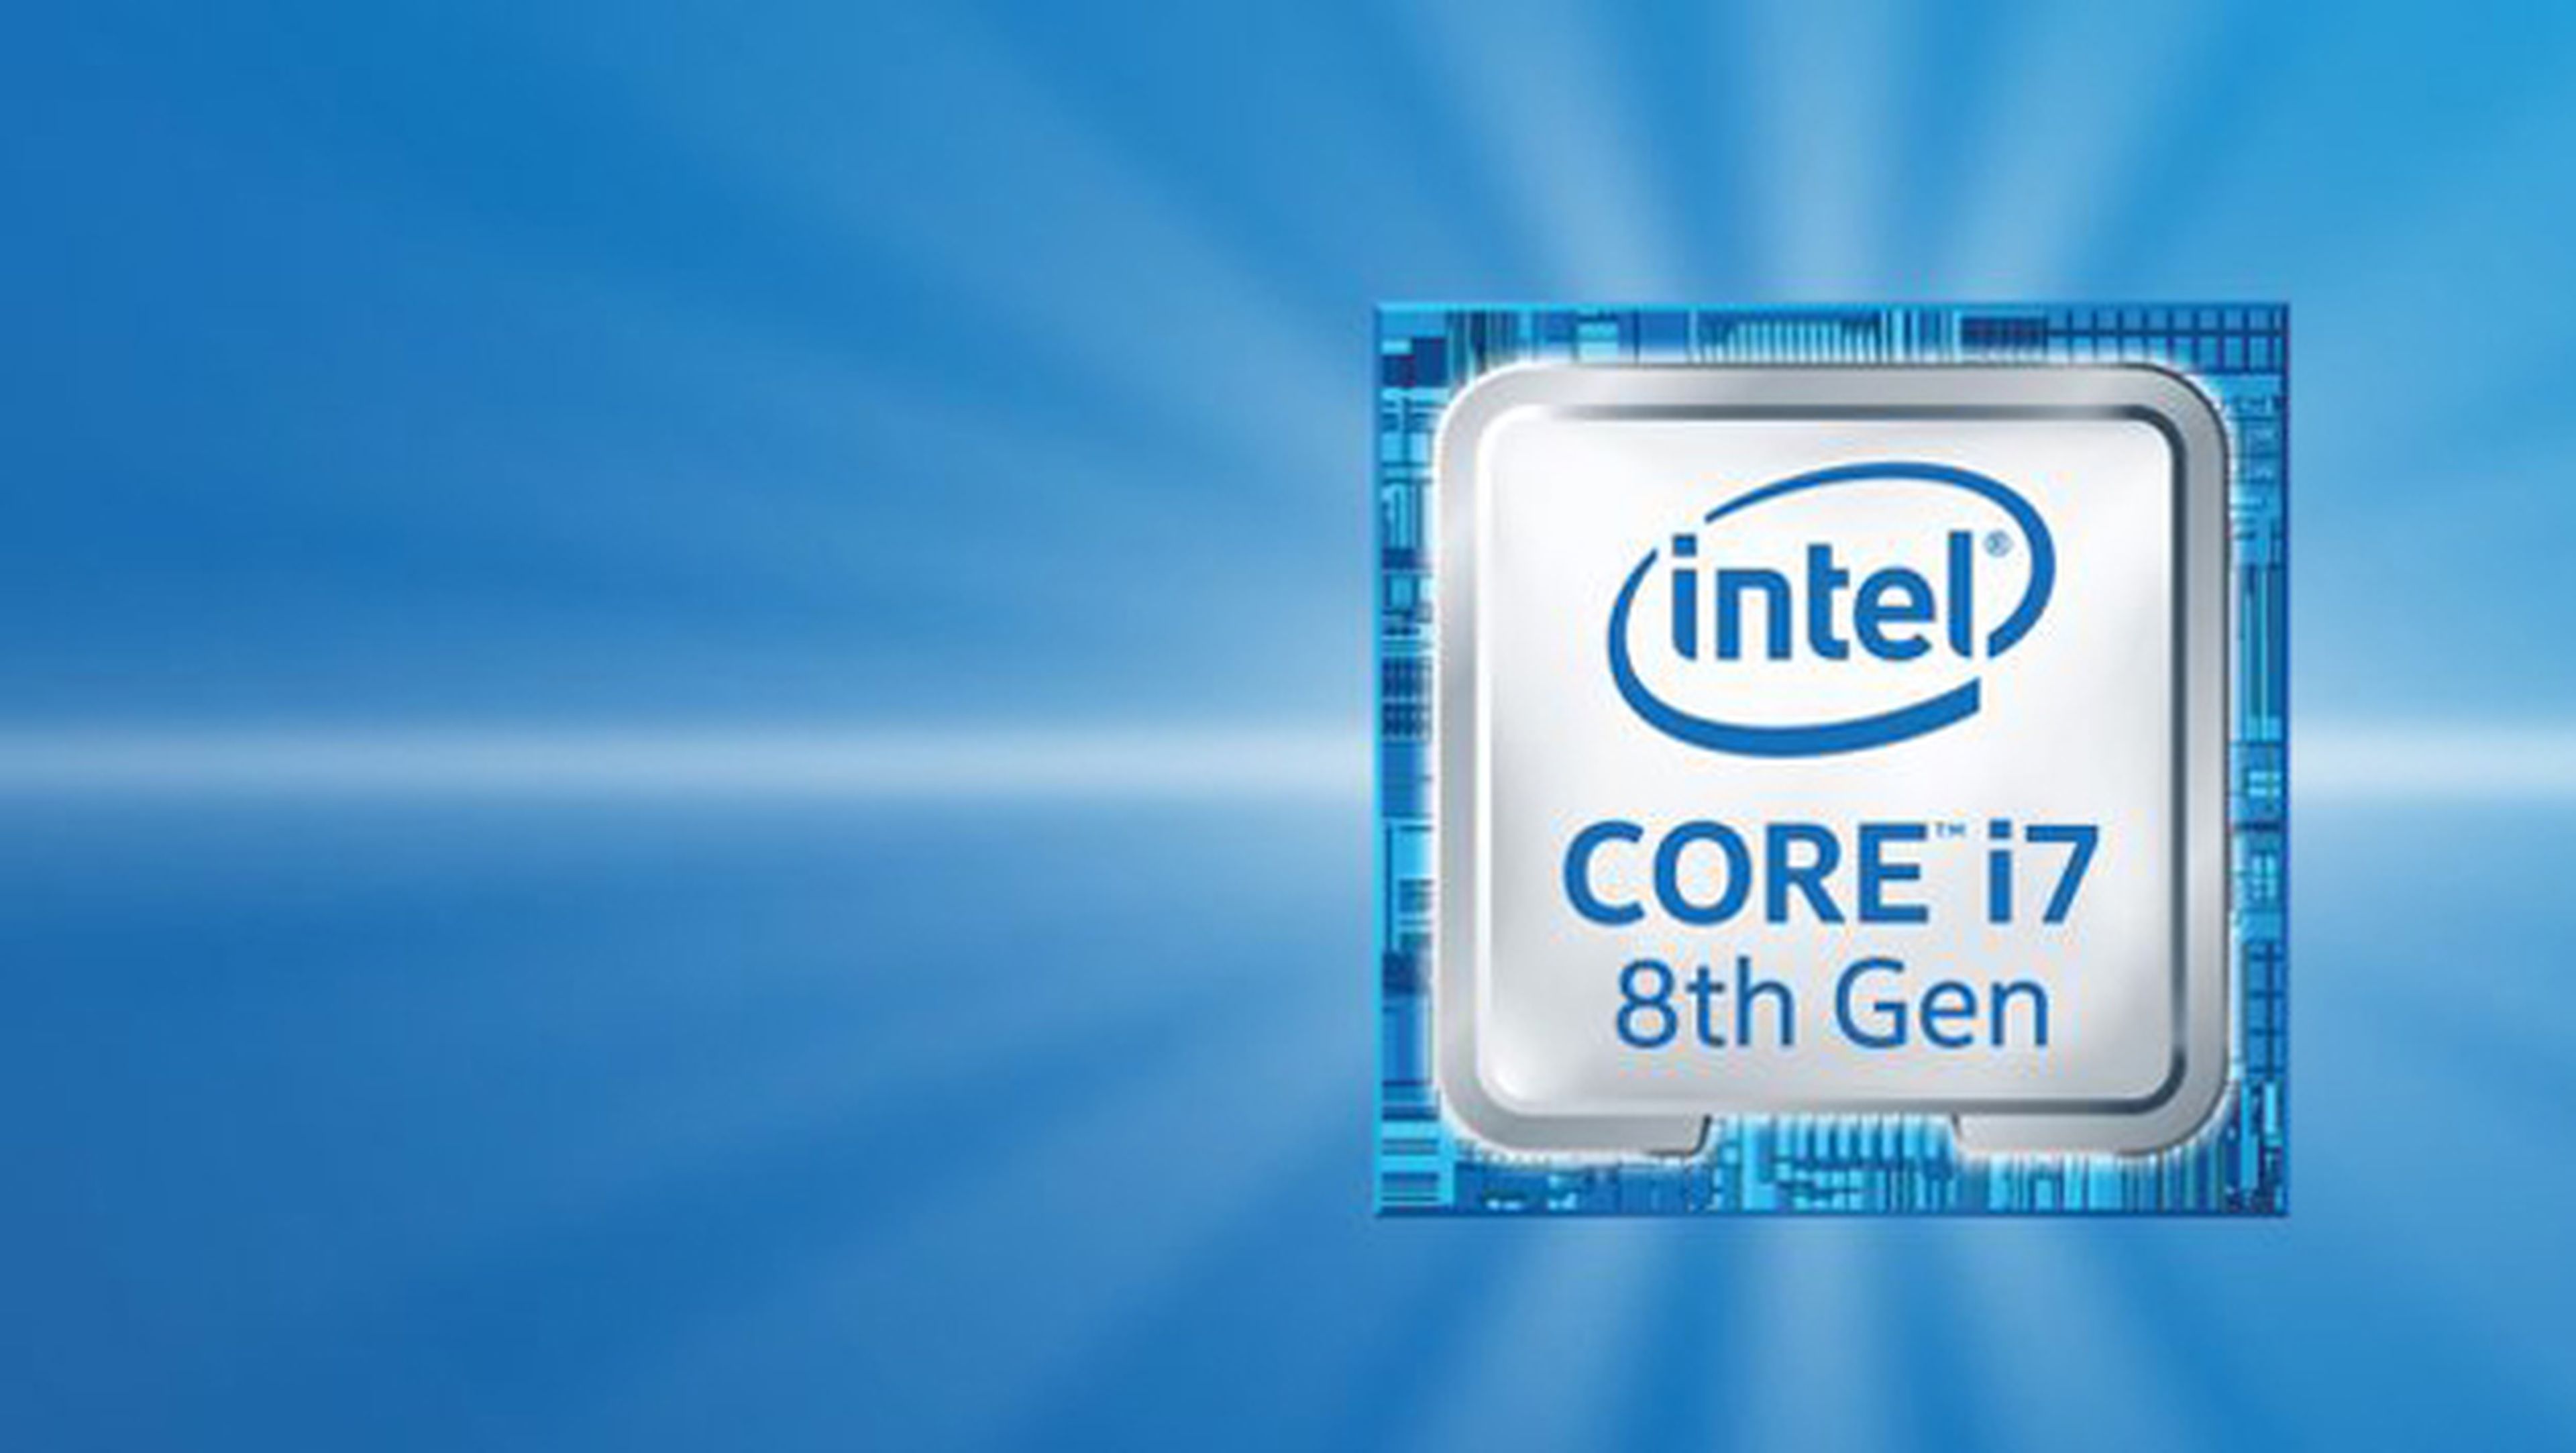 Процессор 8 Gen Intel Core i7. Core i7-8650u. Intel Core i7 7 Gen. Кристалл процессора Intel Core i7. Когда вышел интел